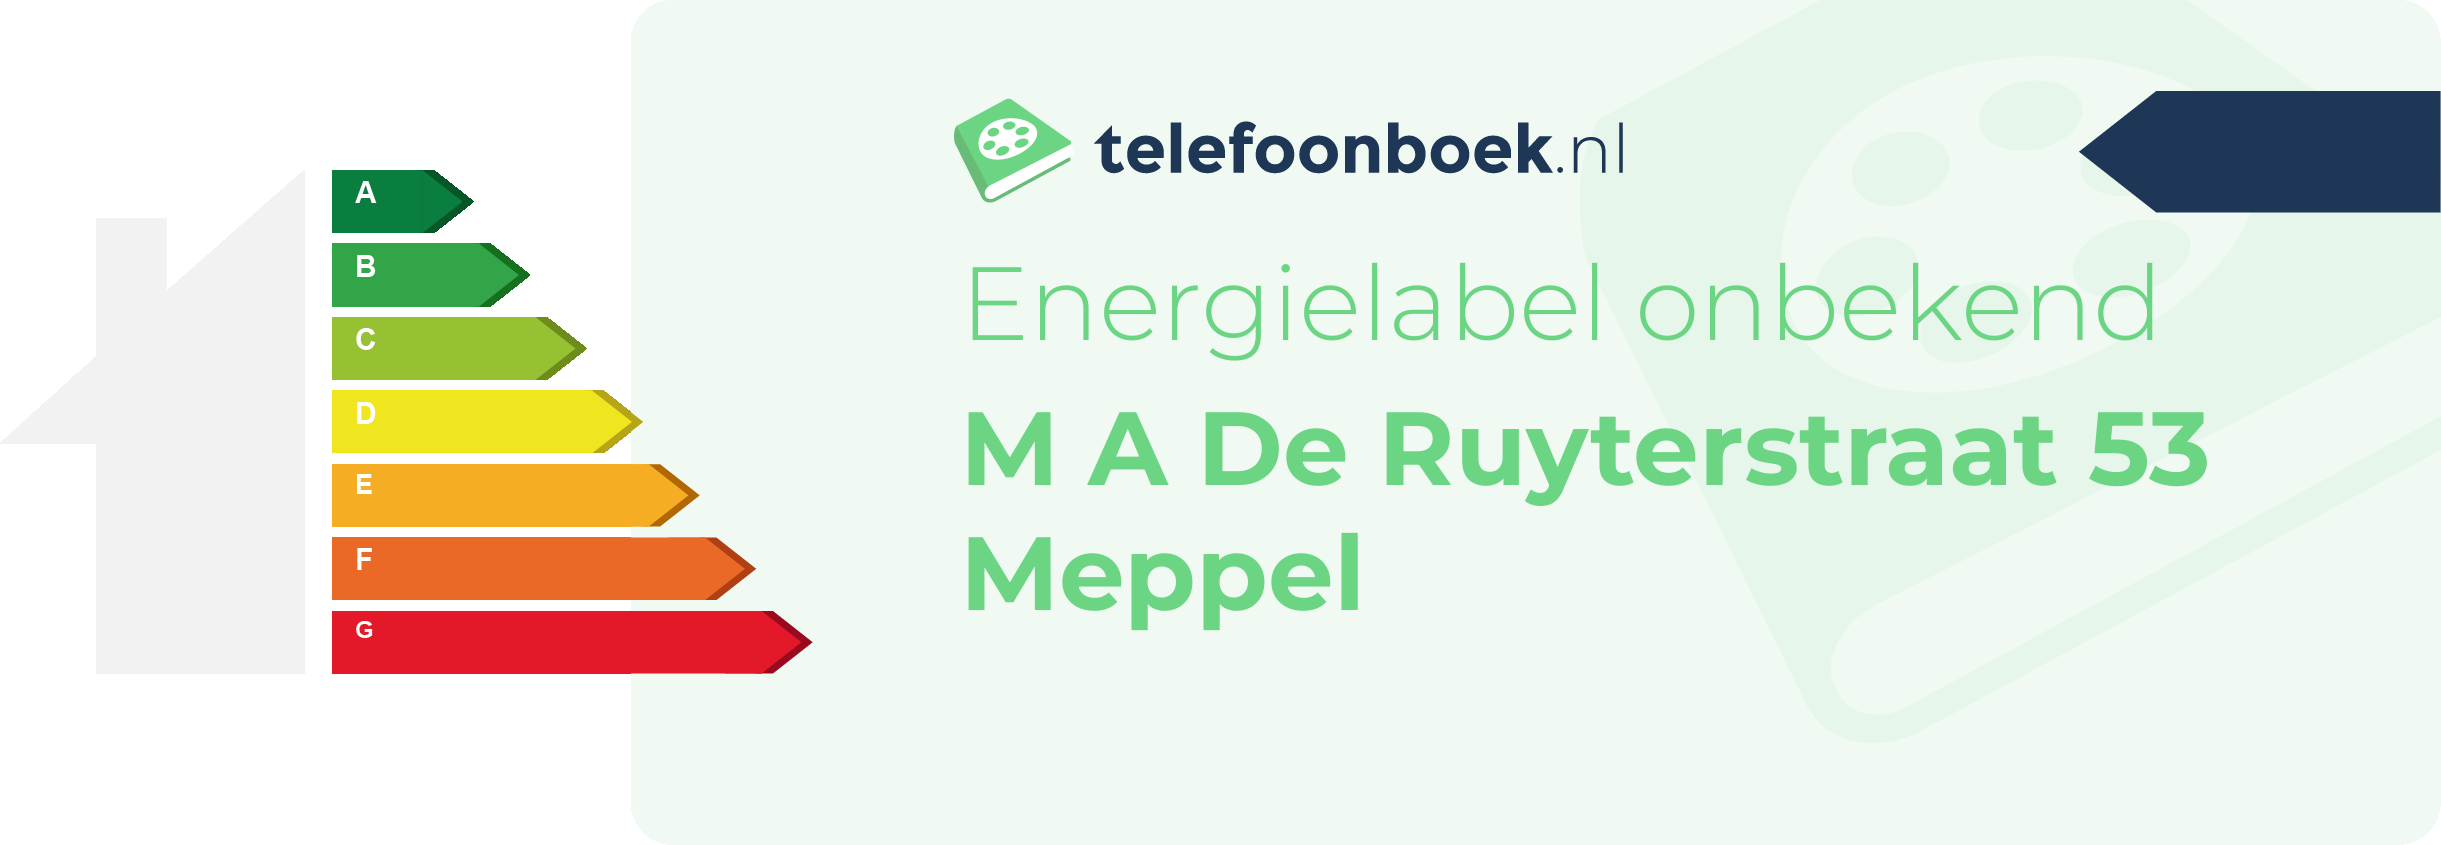 Energielabel M A De Ruyterstraat 53 Meppel